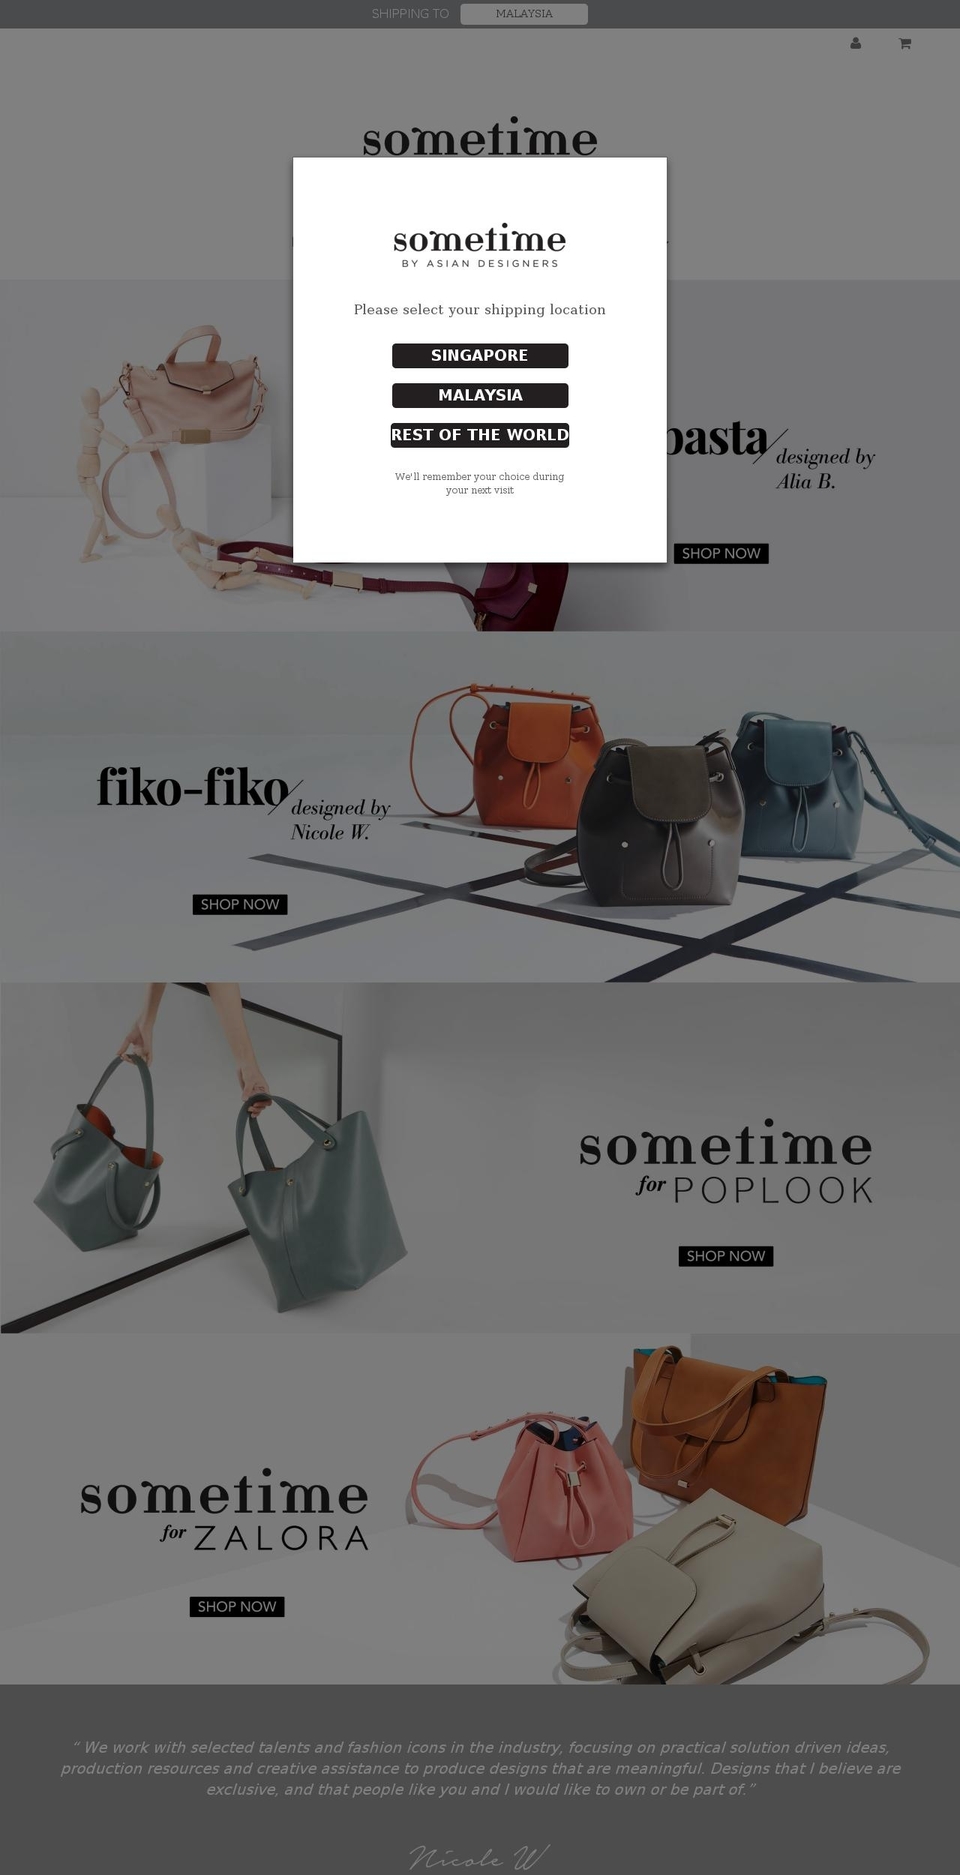 sometime.asia shopify website screenshot